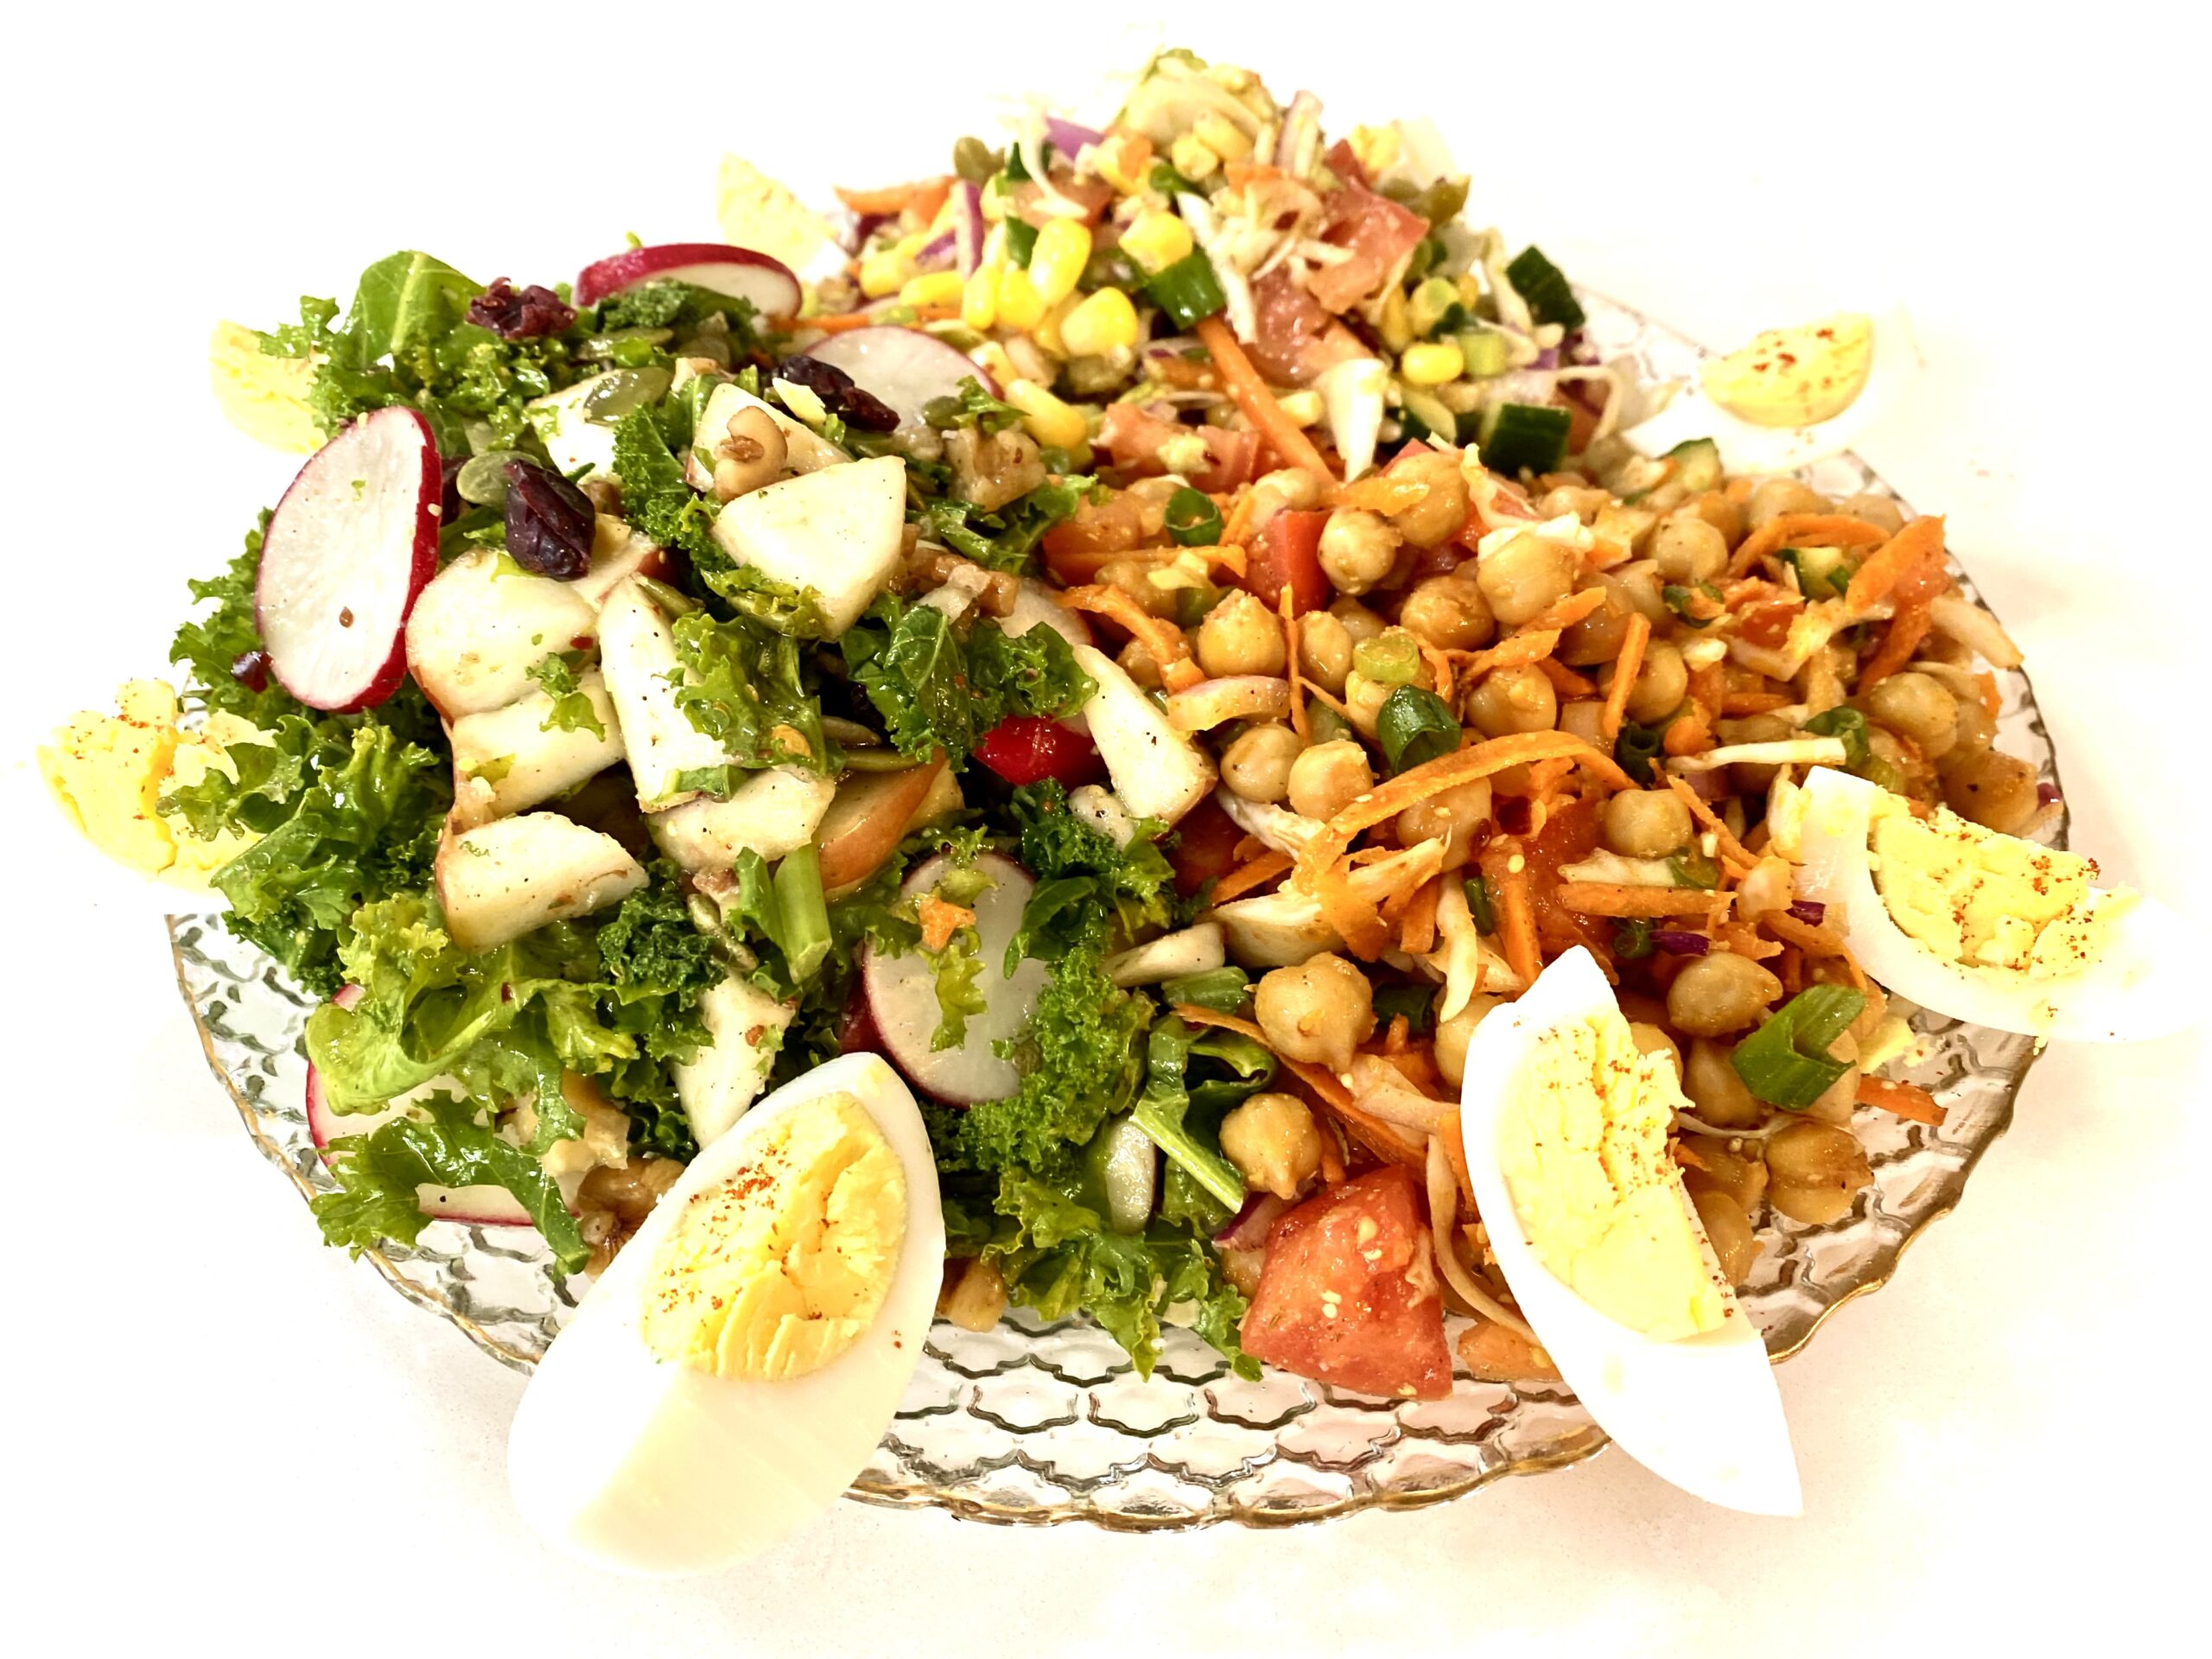 Recipe of the Week: Salad Medley